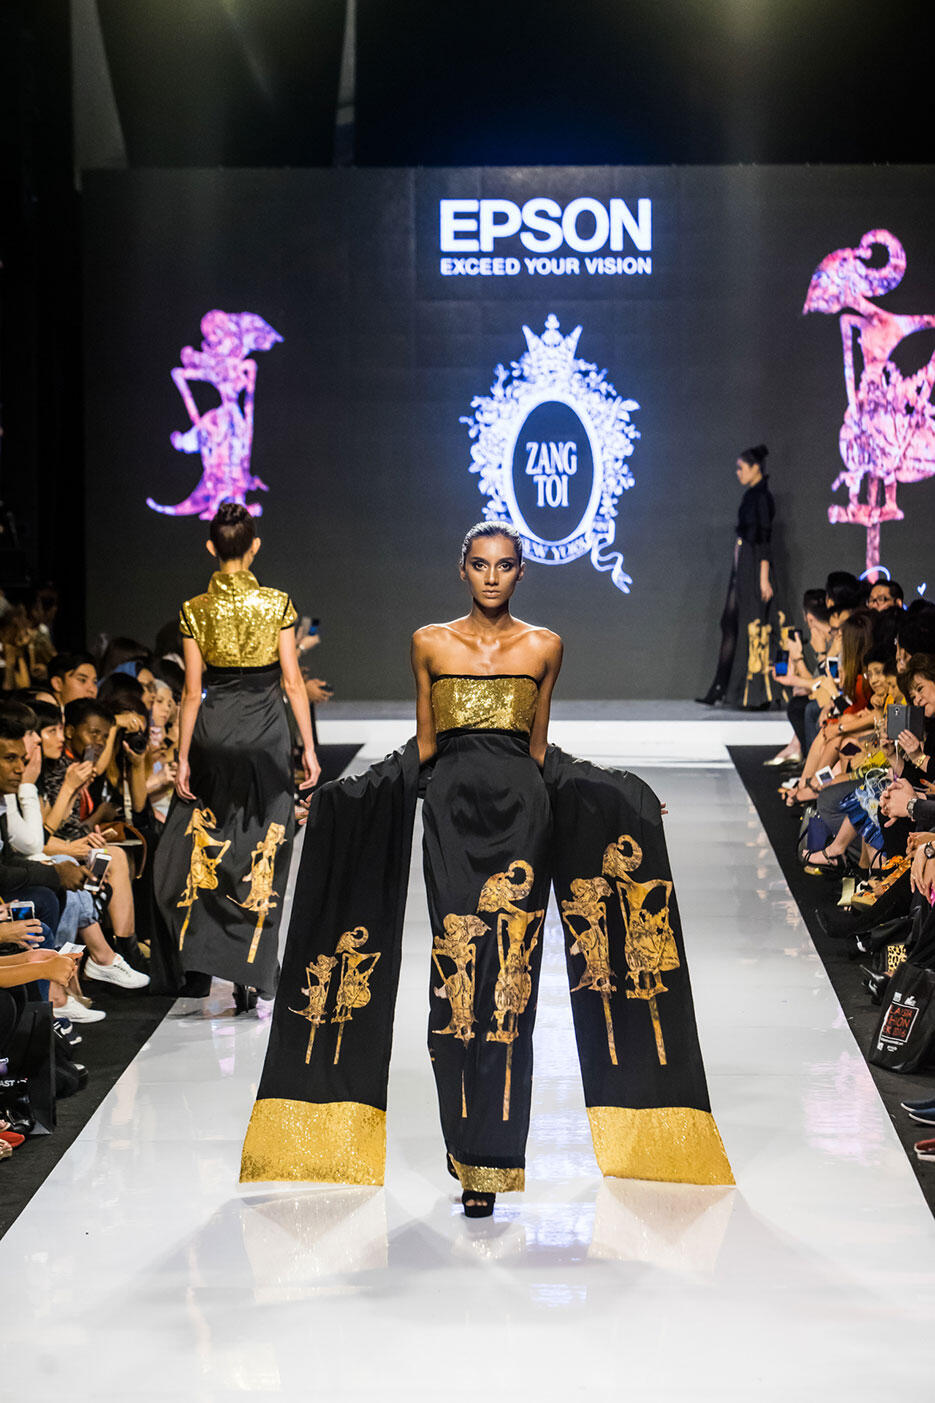 a-zang-toi-epson-malaysia-fashion-week-2016_12